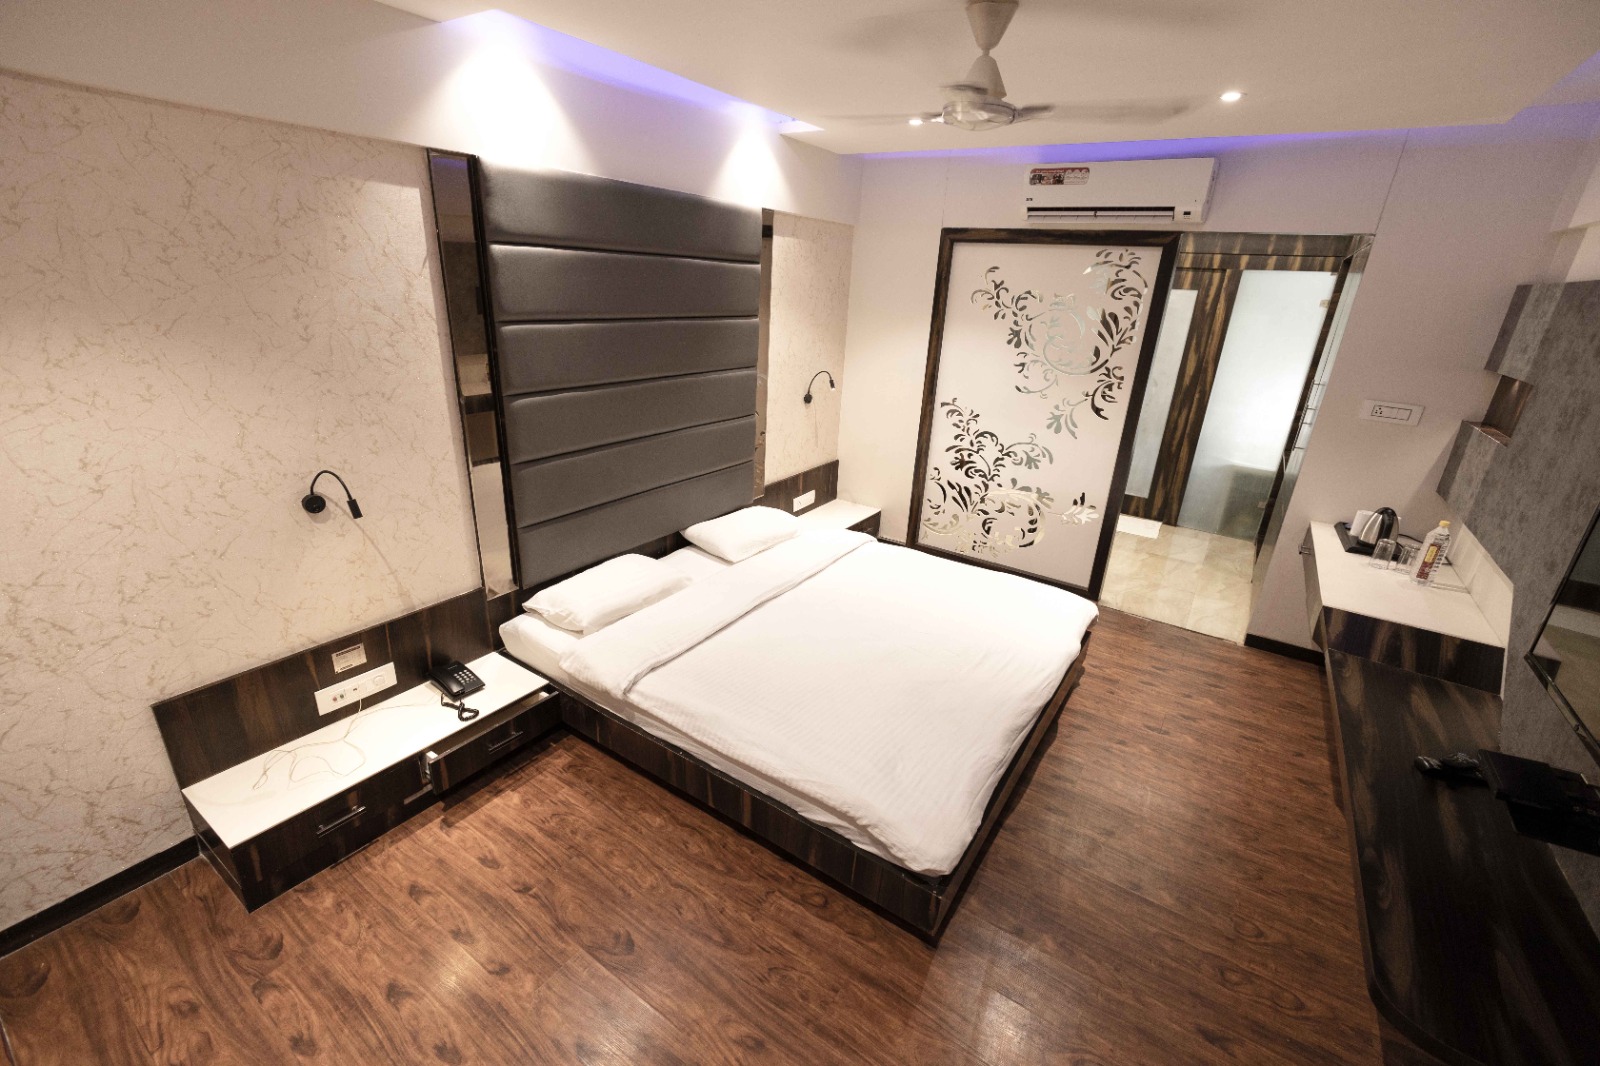 Hotels near mahakal temple in ujjain - grand suite room